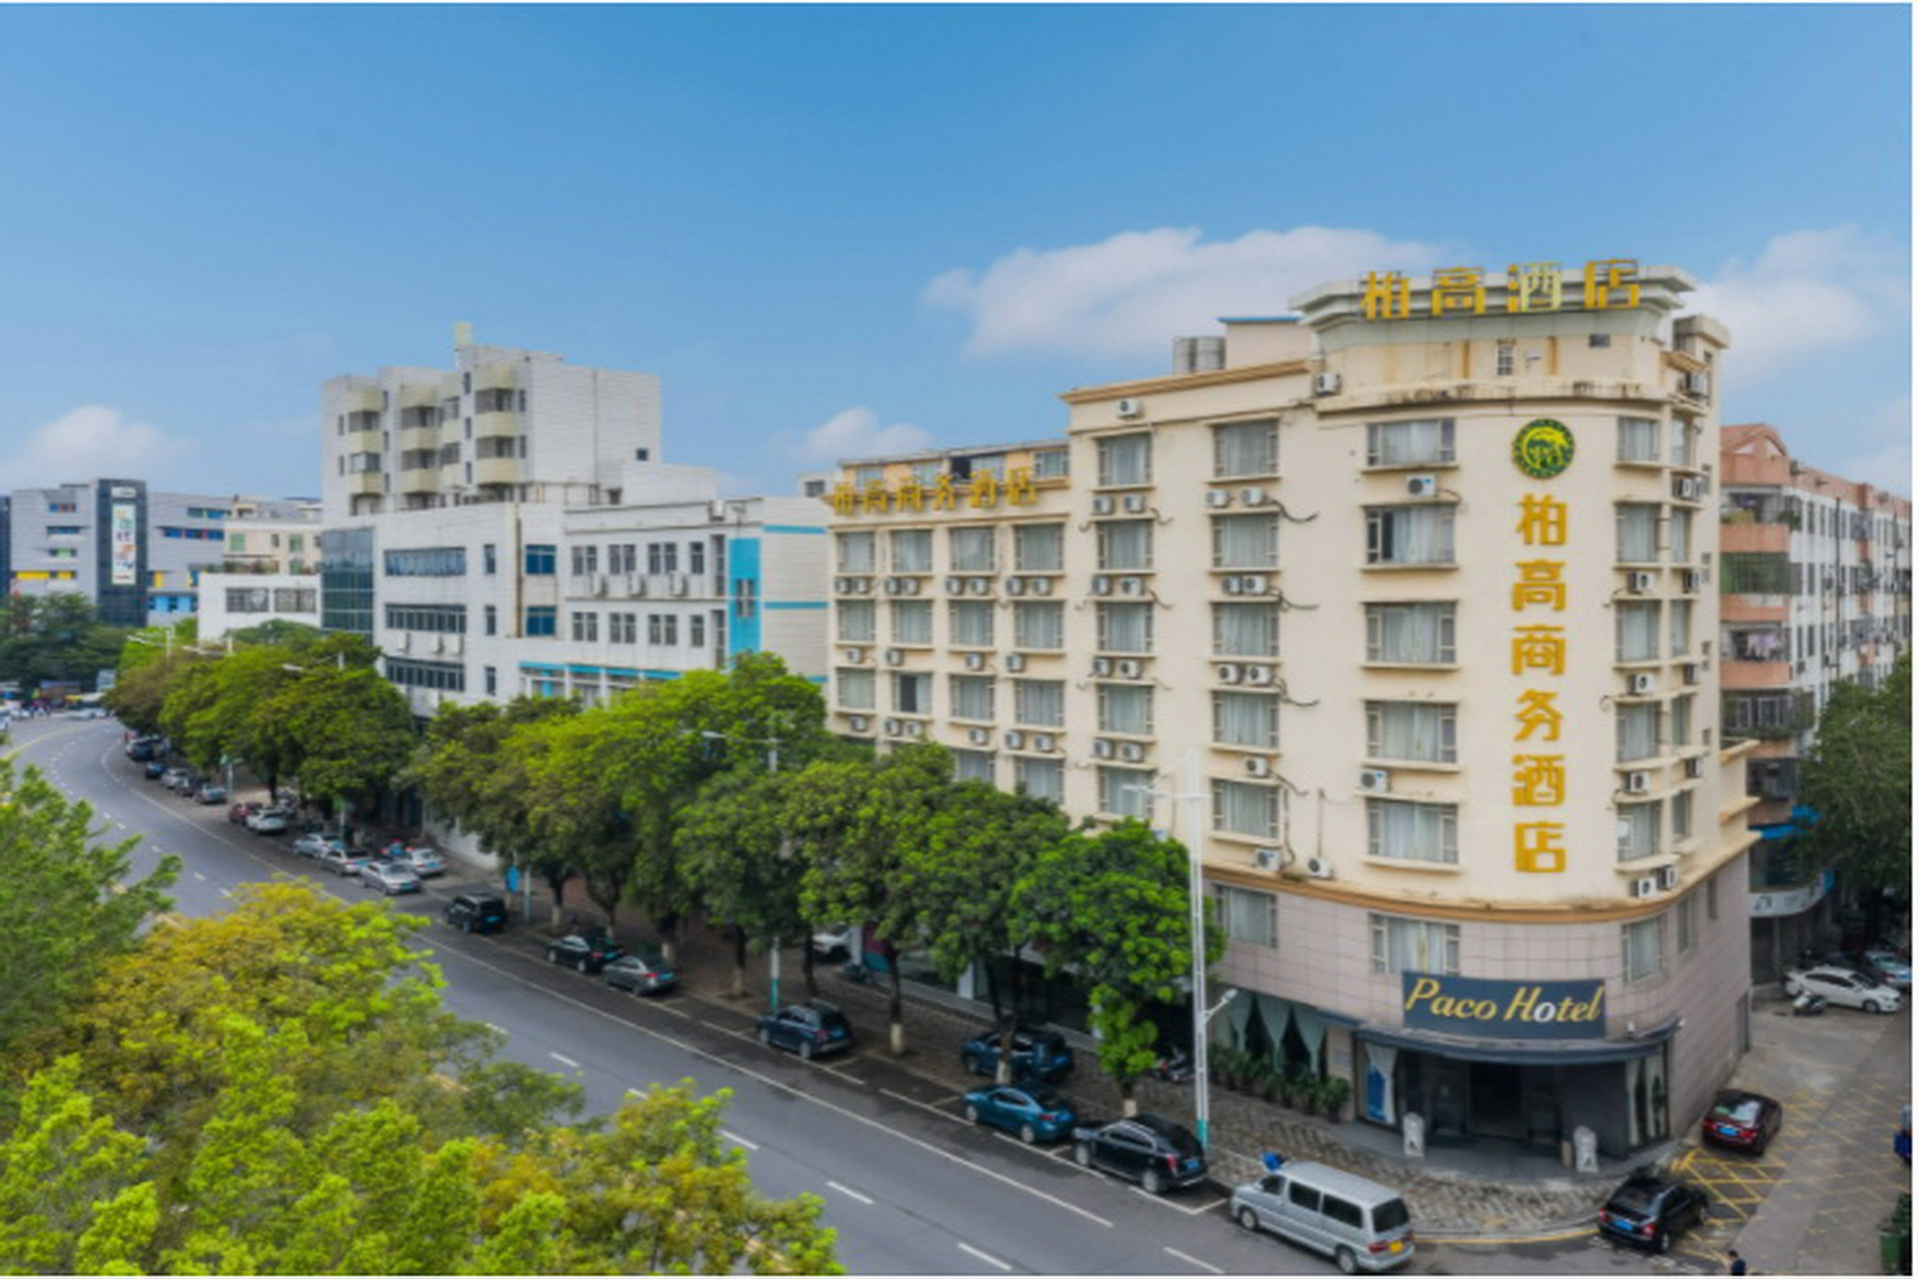 Paco Hotel (Shunde Beijiao Midea Group Headquarter, Foshan